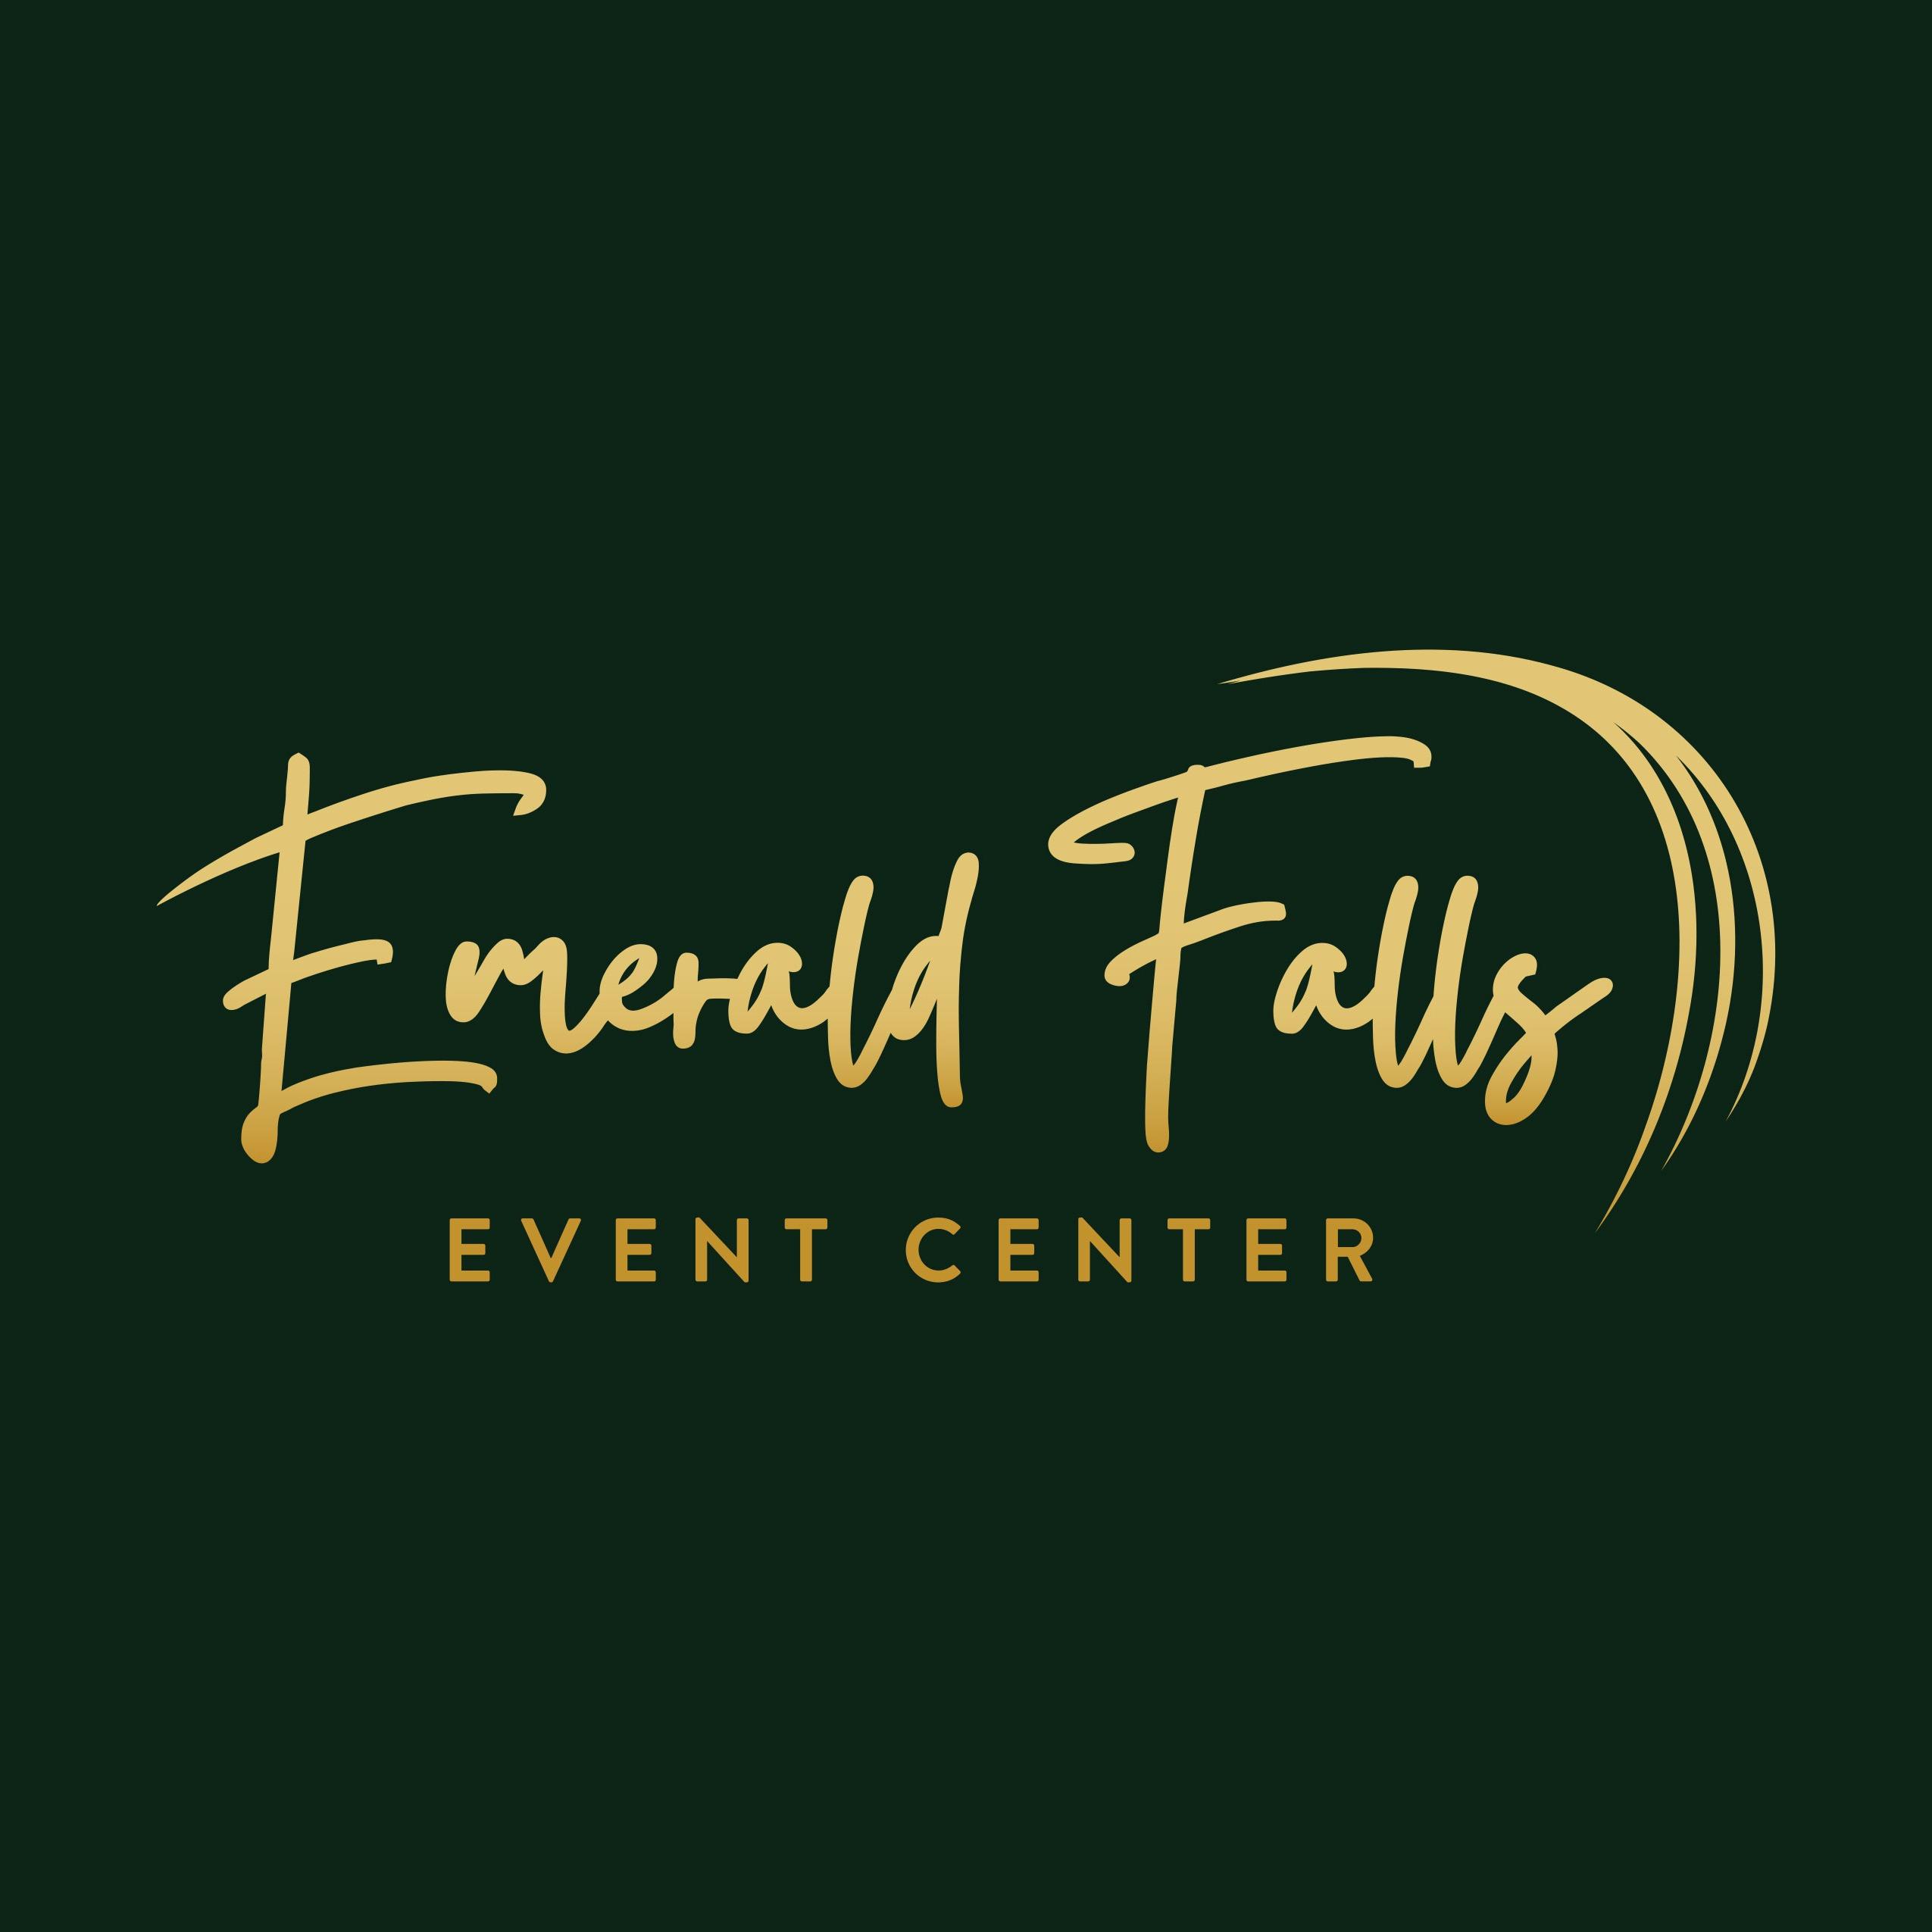 Emerald Falls Event Center